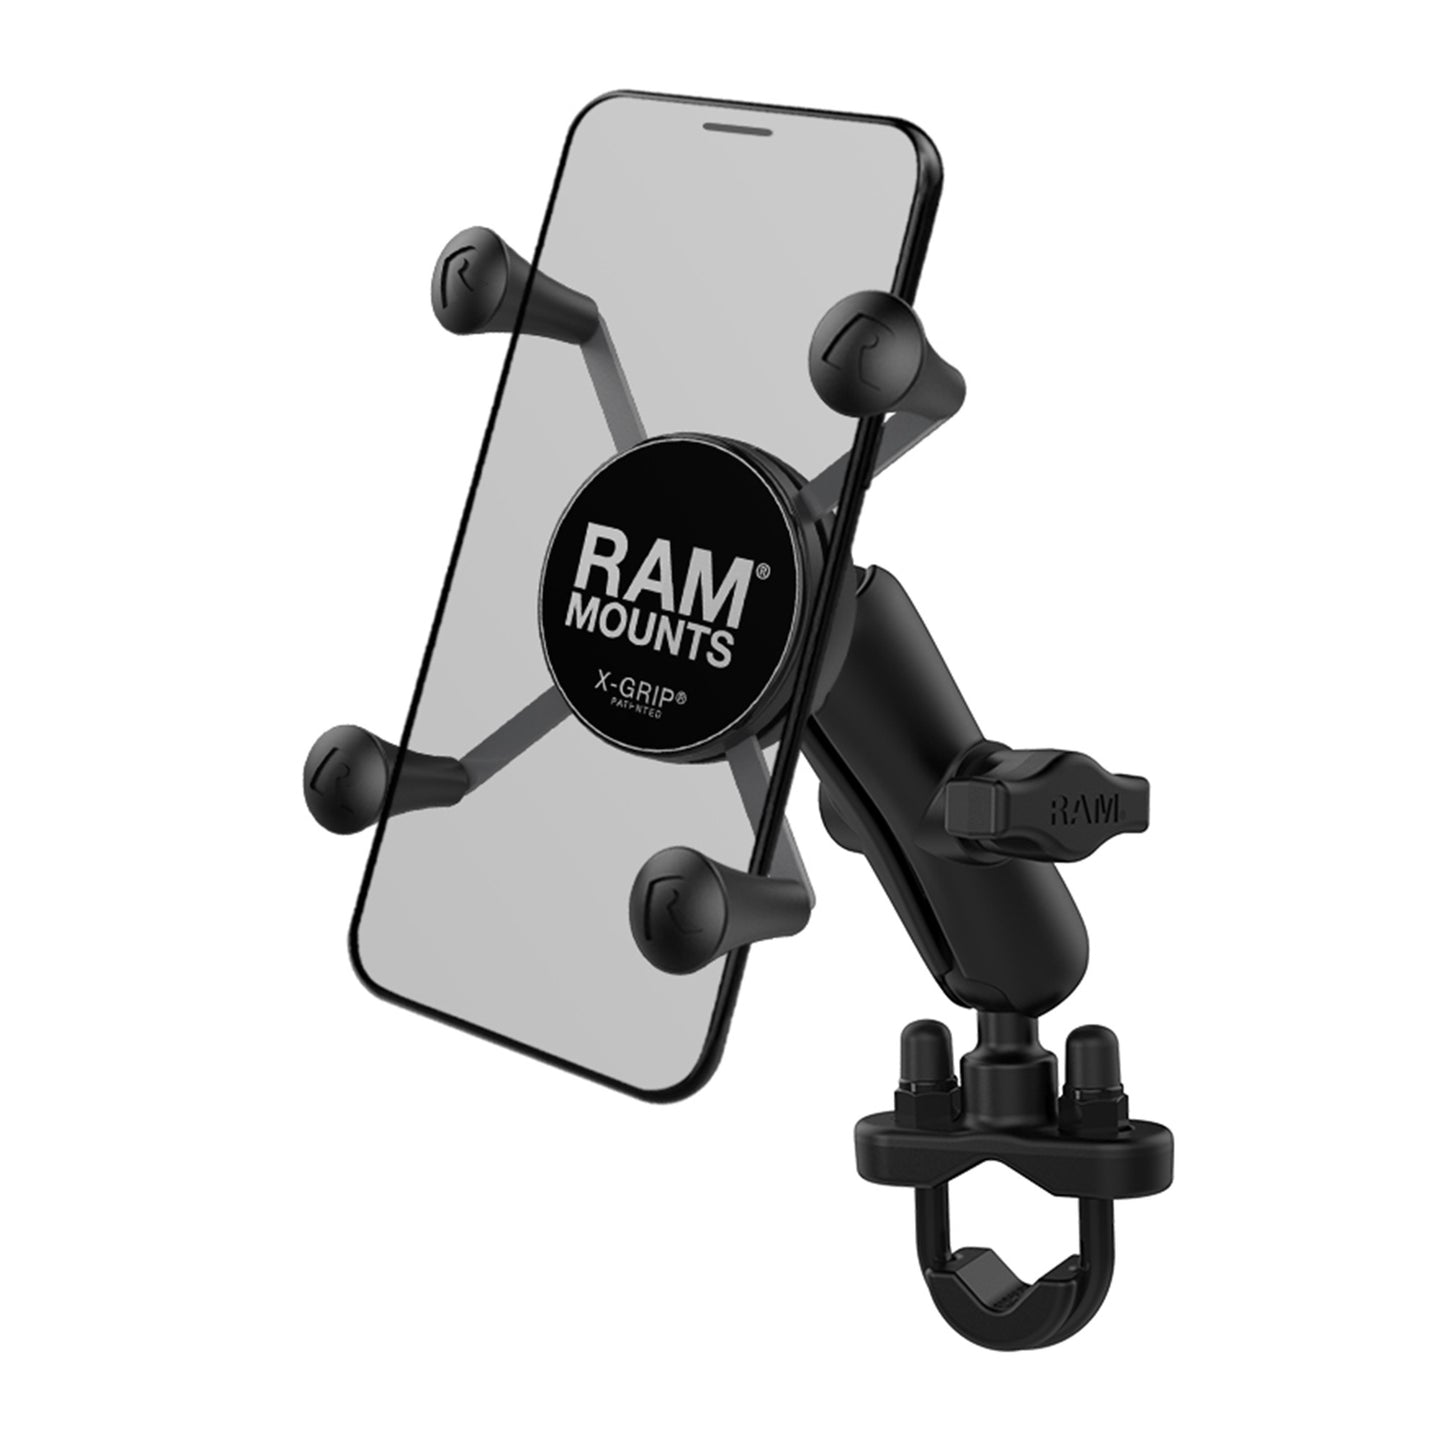 RAM X-Grip Universal Phone Mount with Handlebar U-Bolt Base - Non-Retail Packaging - 15-07430